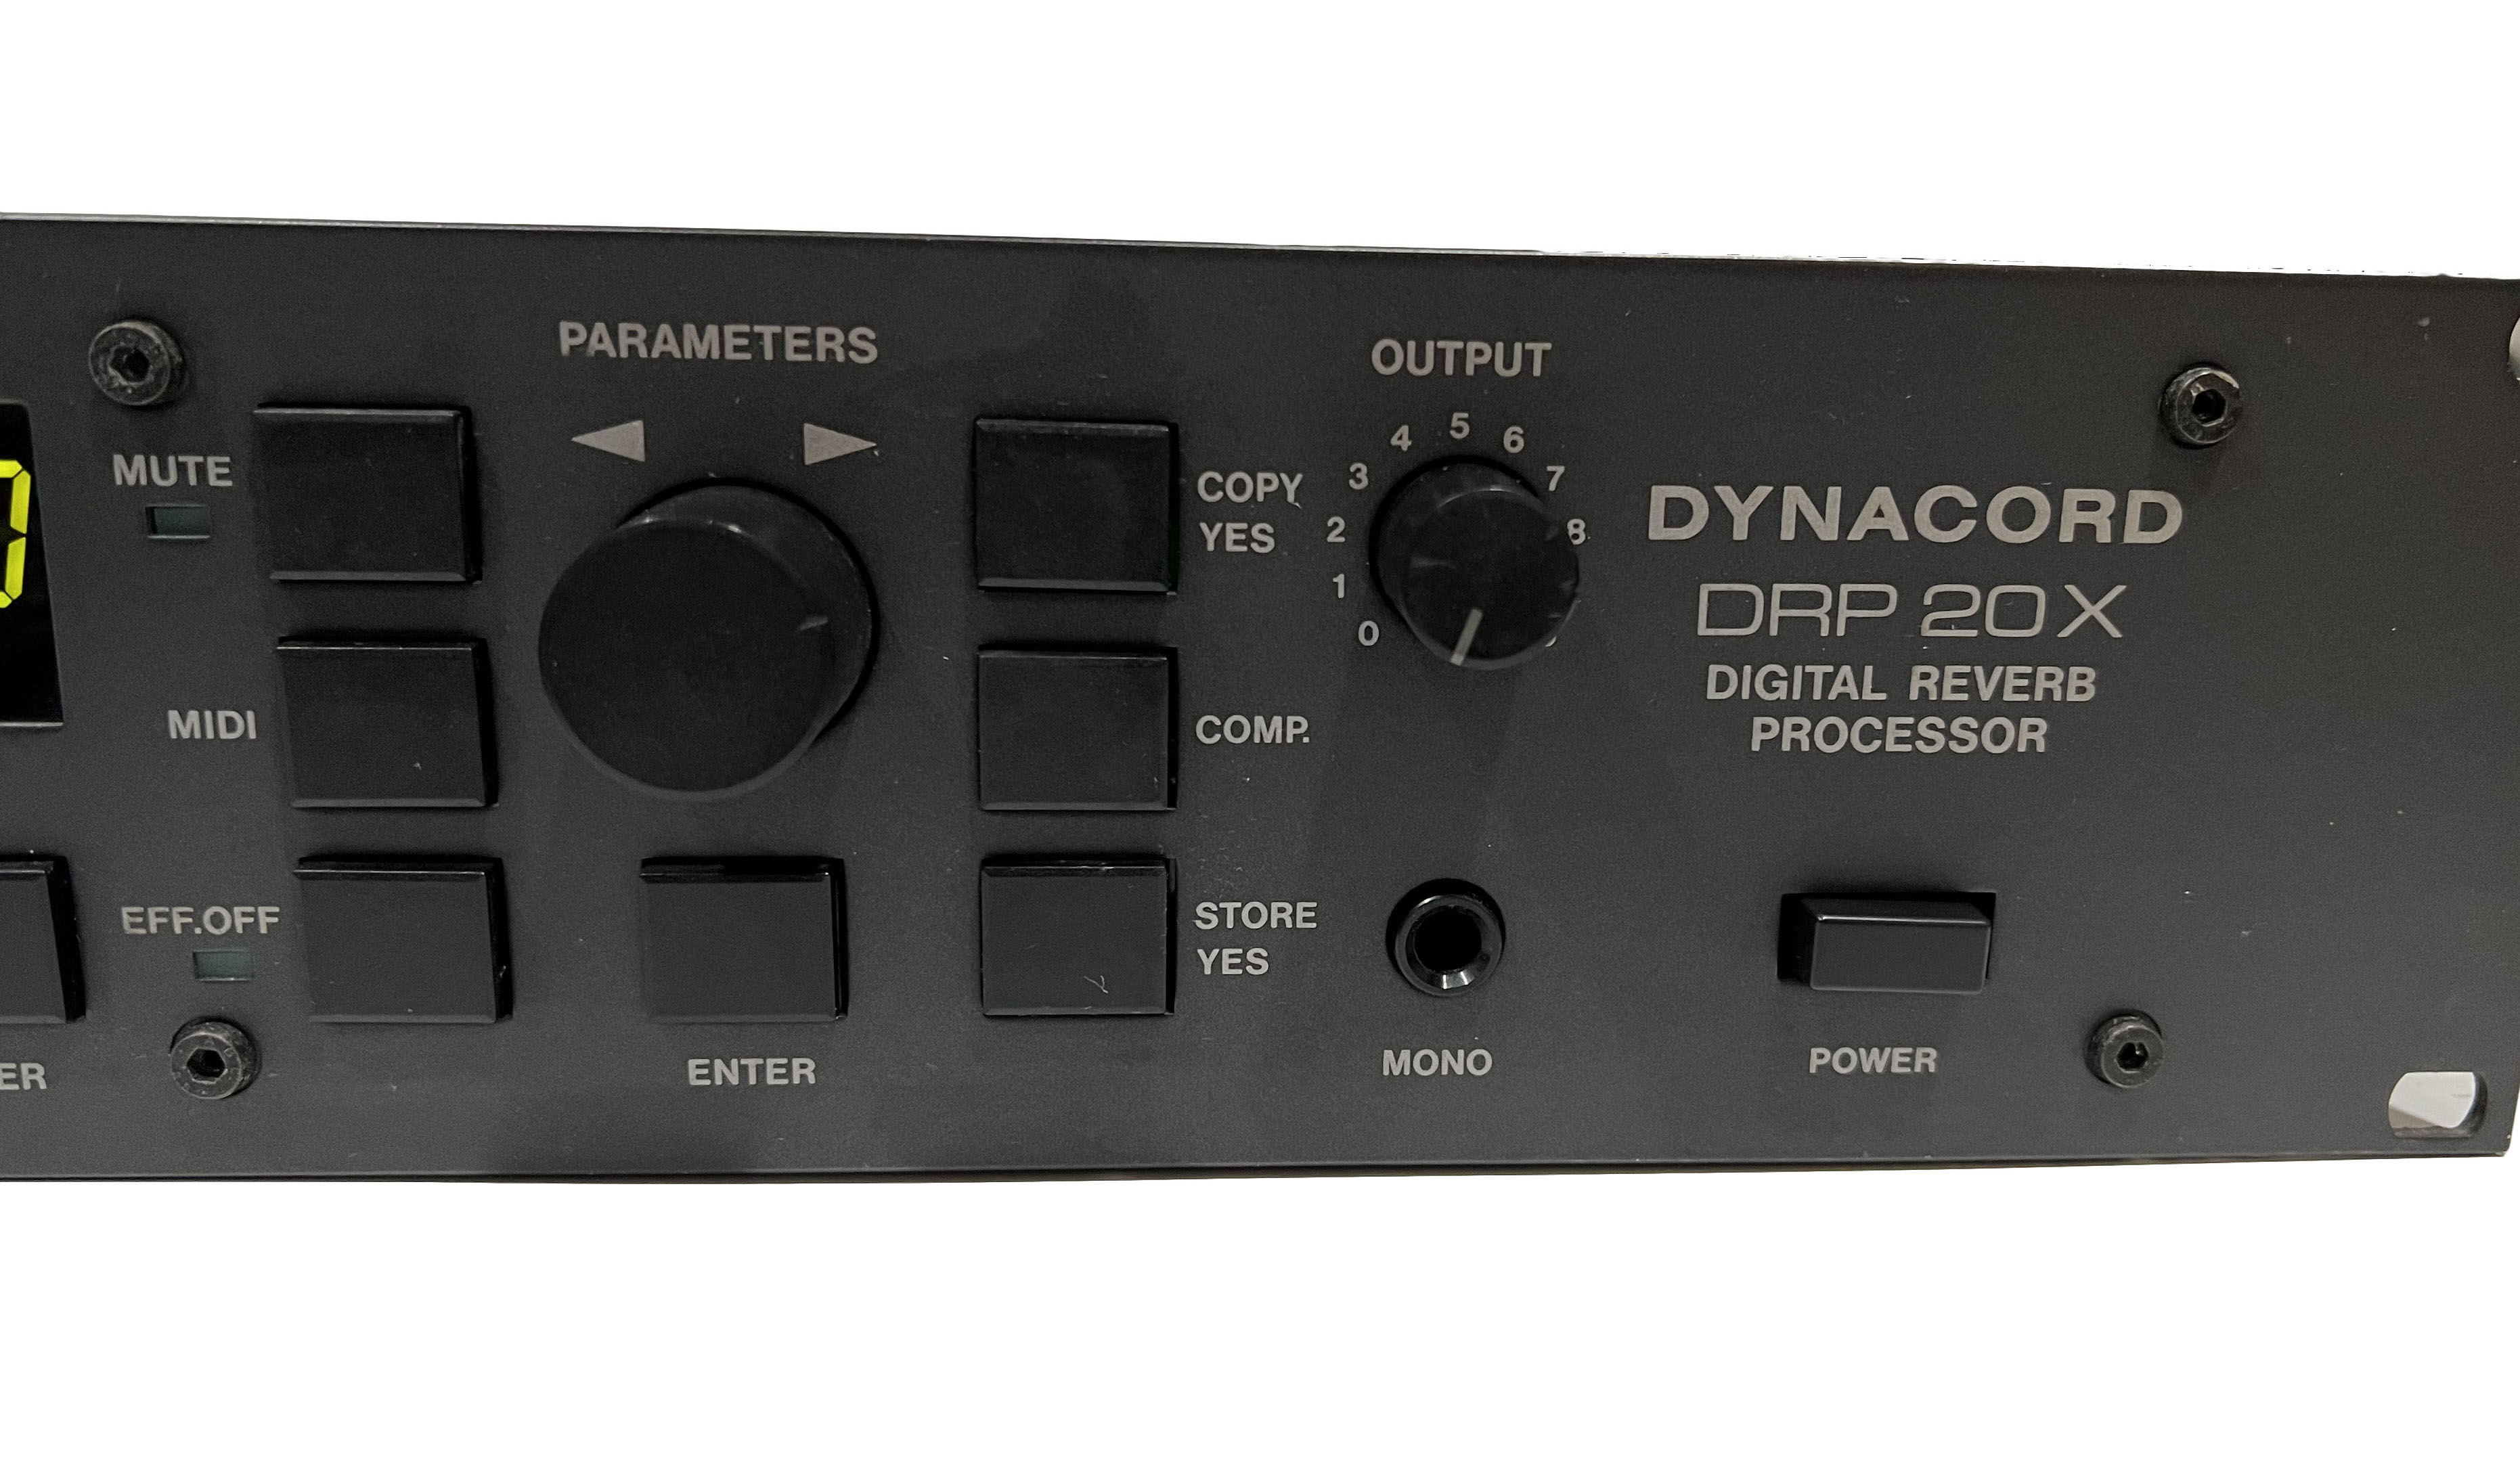 Dynacord DRP 20X digital reverb